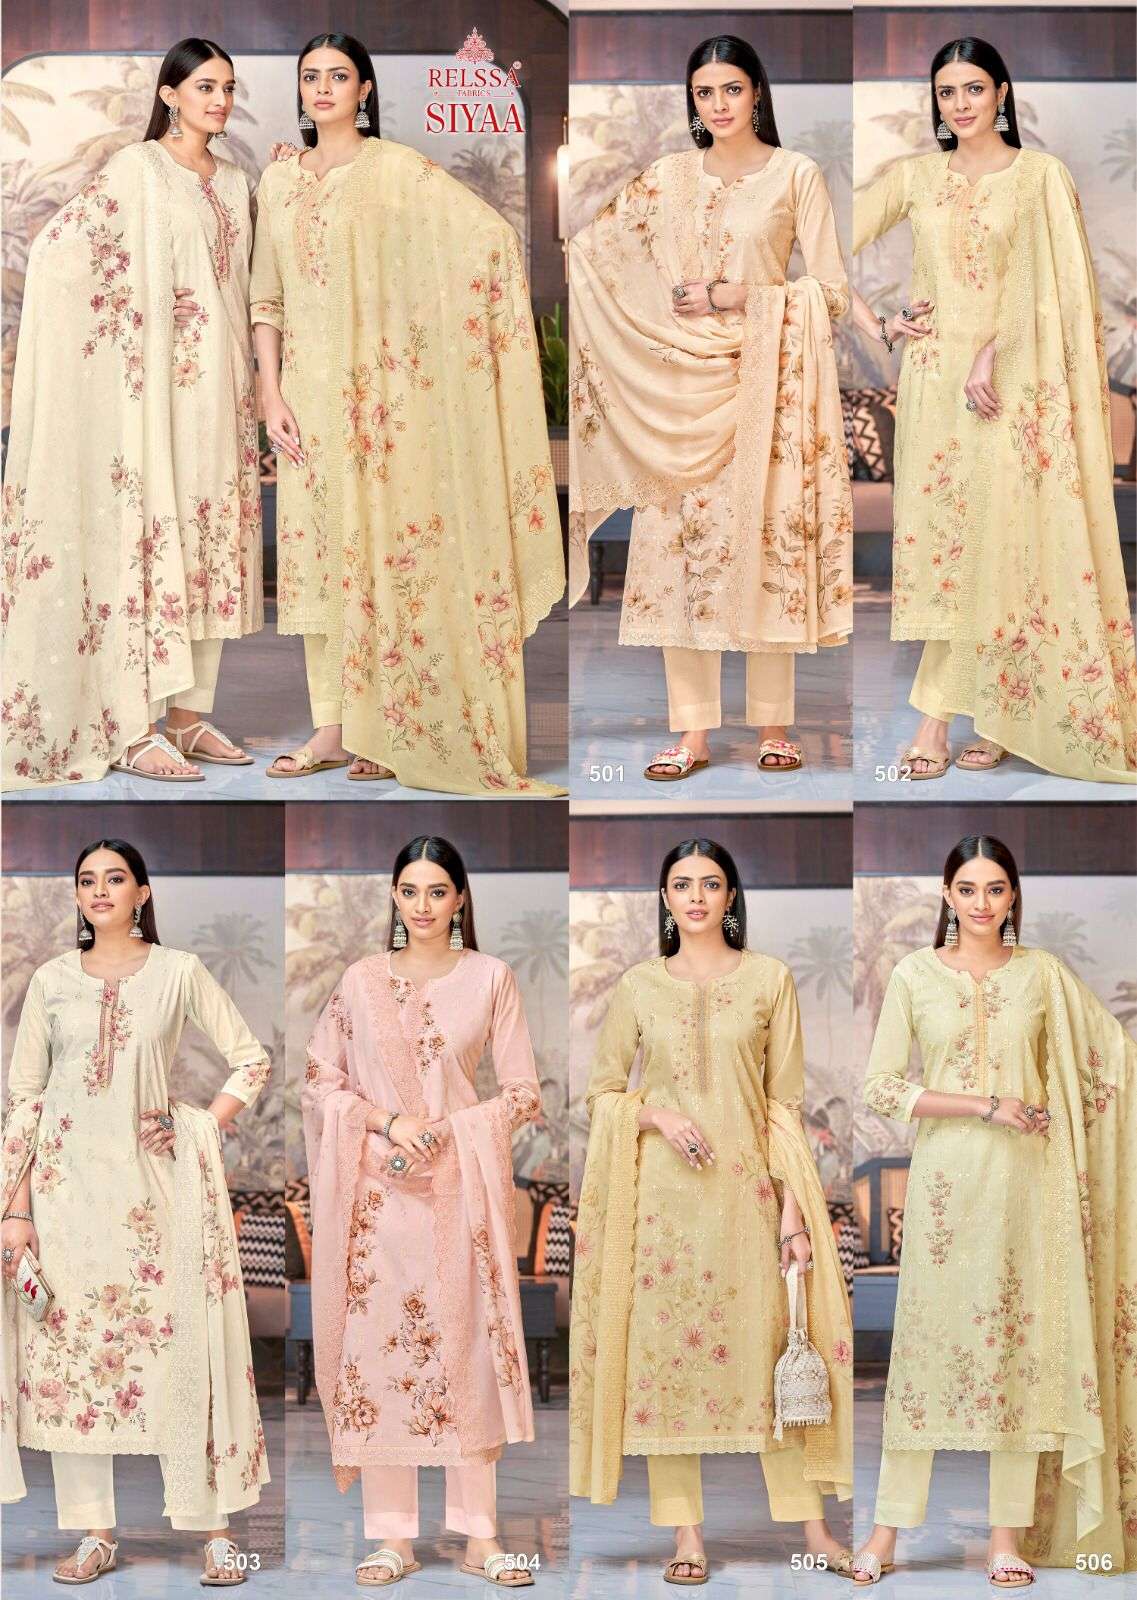 relssa siyaa 501-506 series trendy designer salwar kameez catalogue manufacturer surat